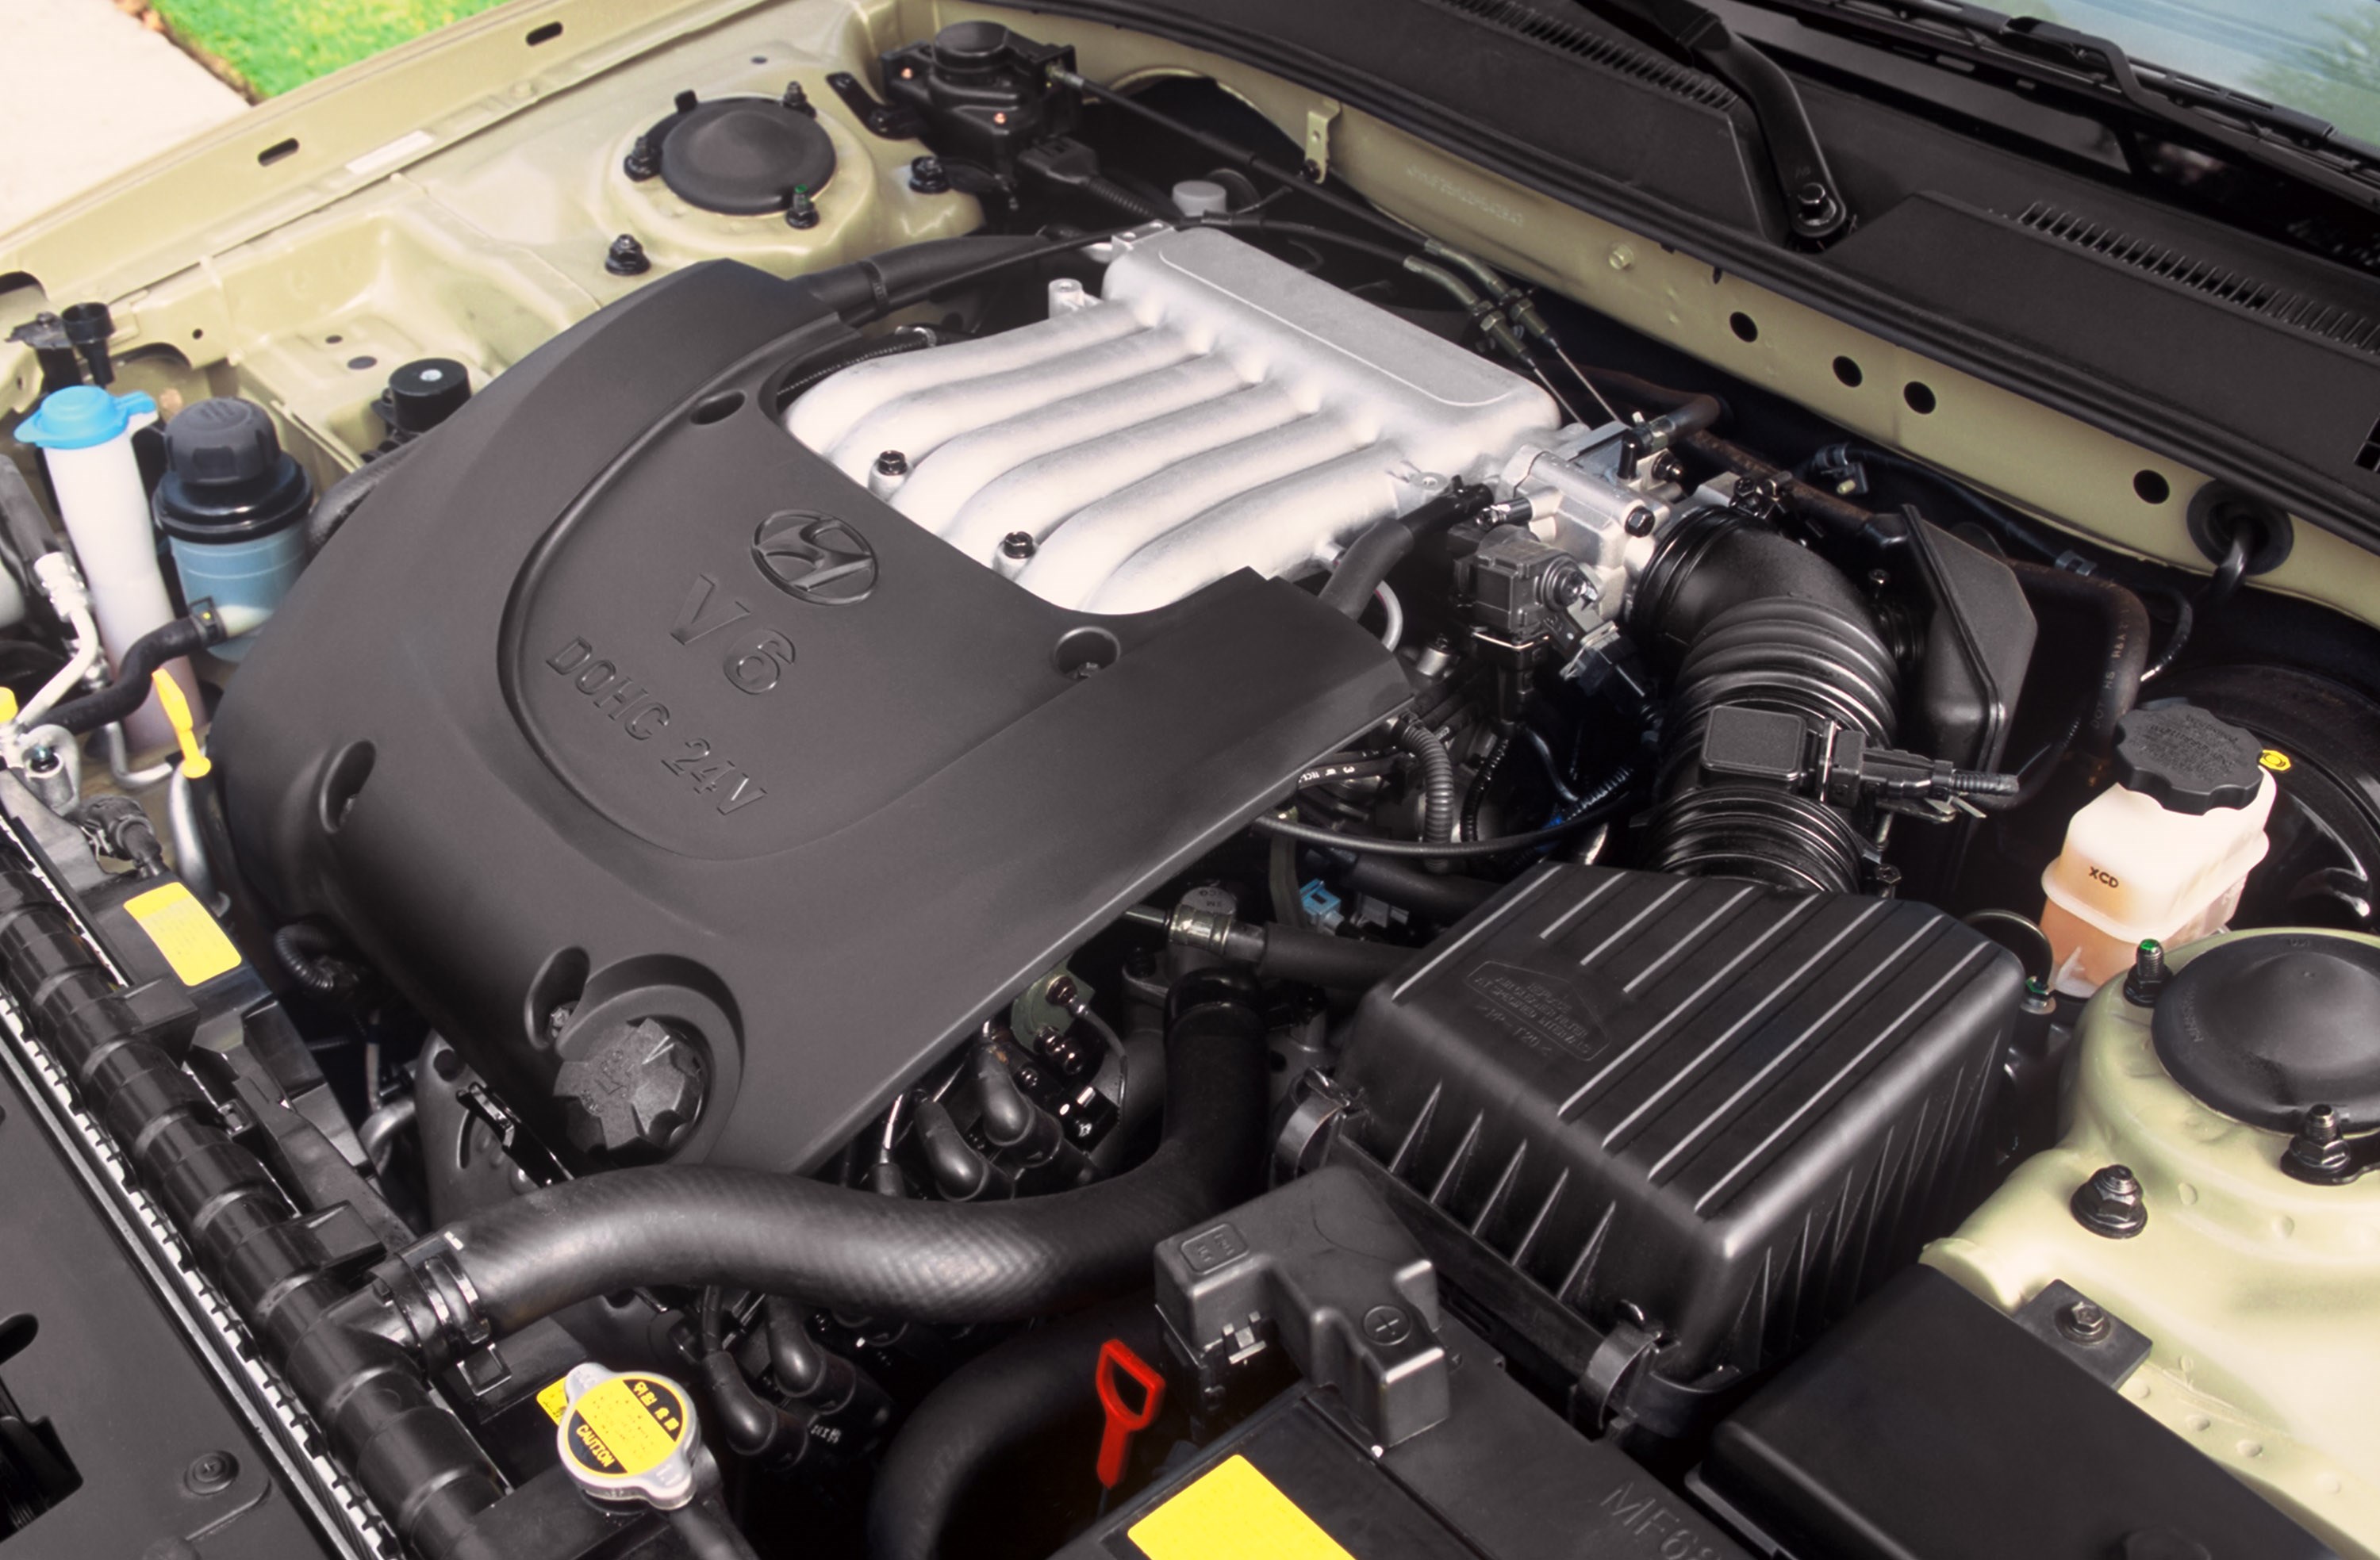 Ресурс цепи ГРМ в двигателе Hyundai Sonata NF фото